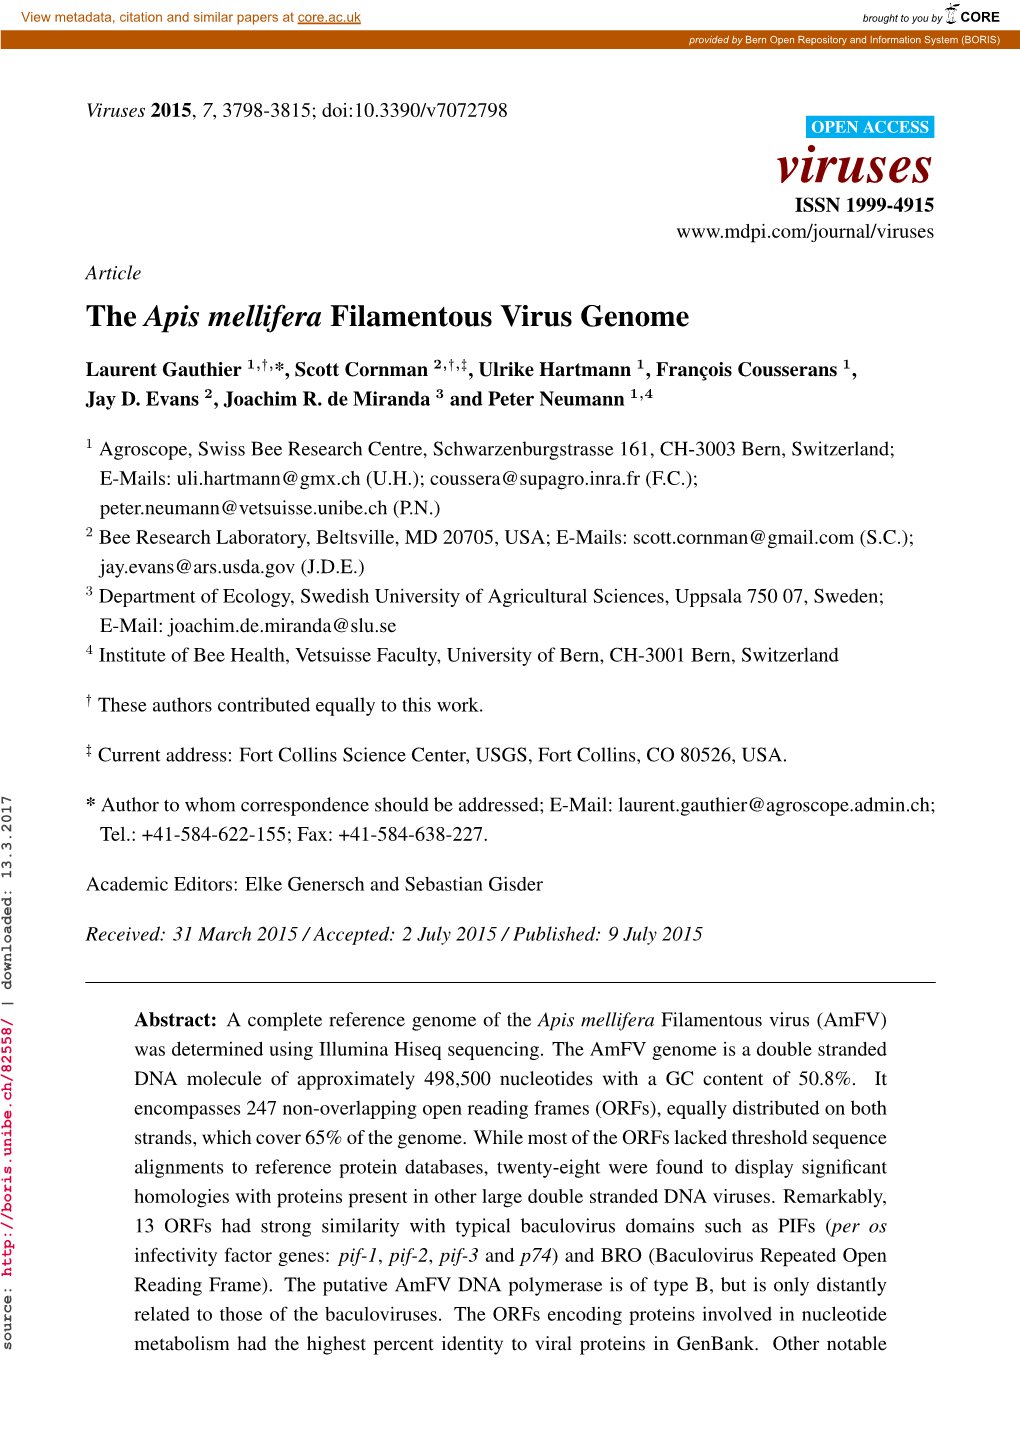 The Apis Mellifera Filamentous Virus Genome